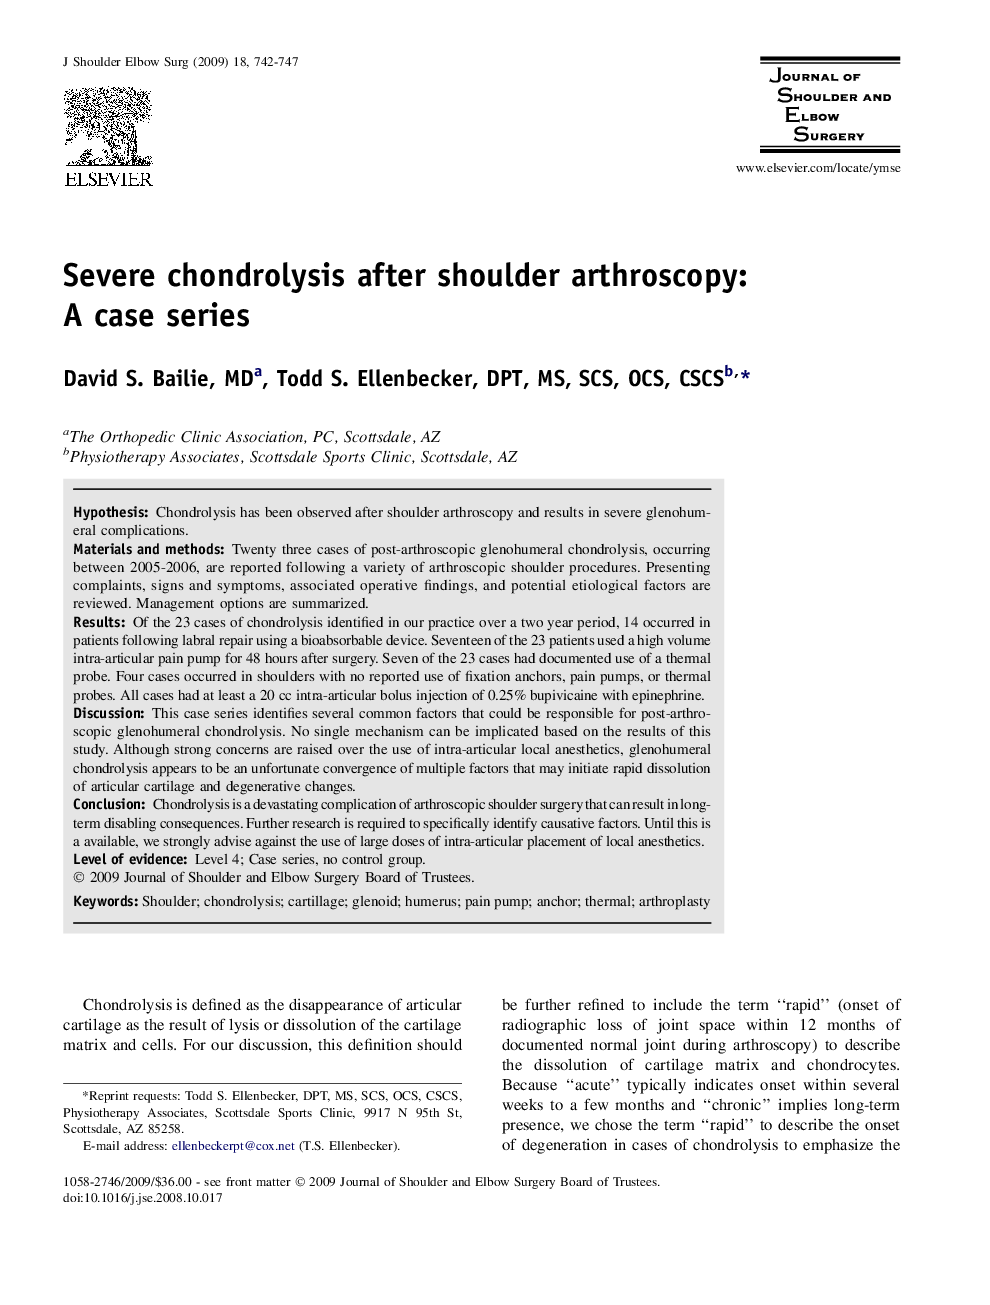 Severe chondrolysis after shoulder arthroscopy: A case series